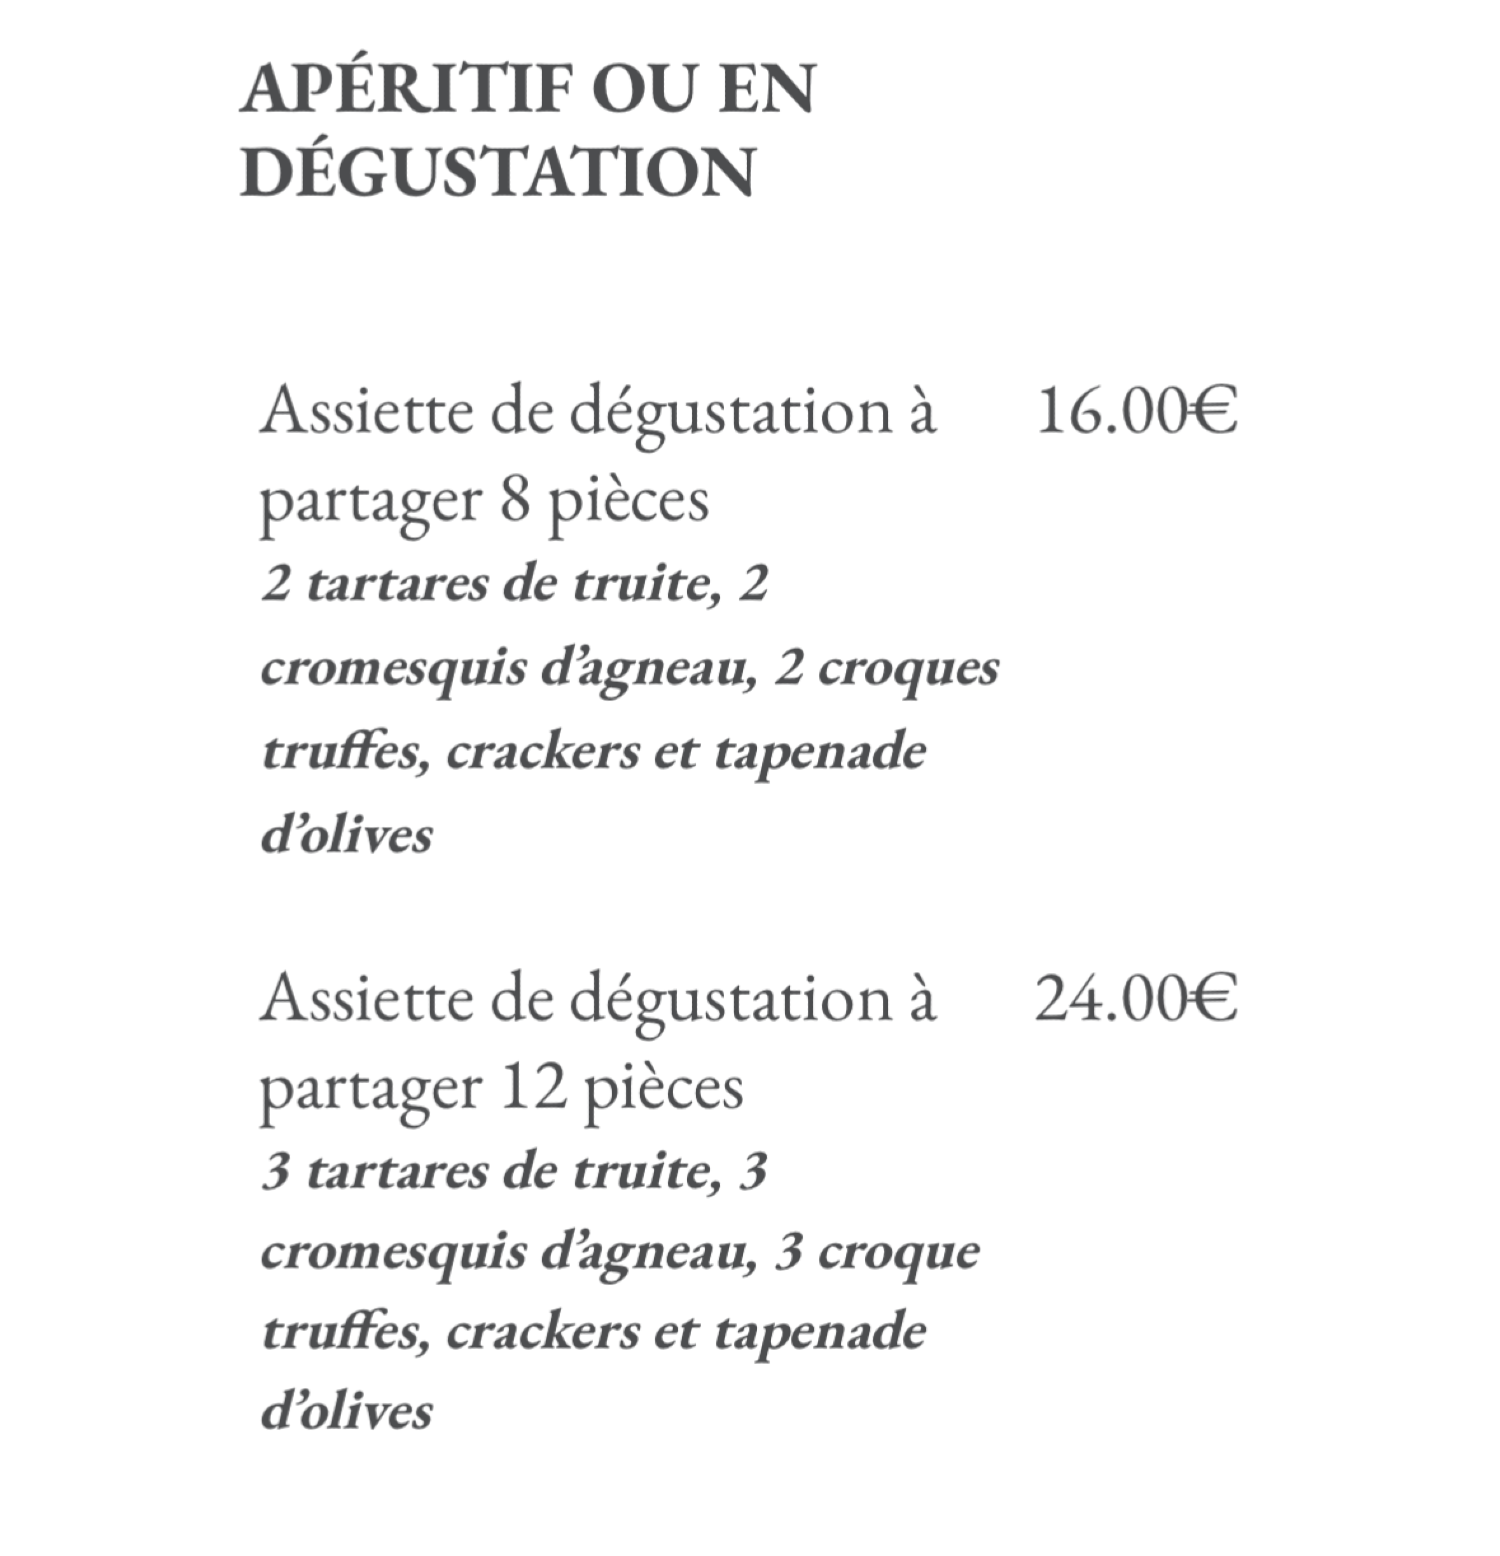 Brasserie Chavant Voiron's full menu online